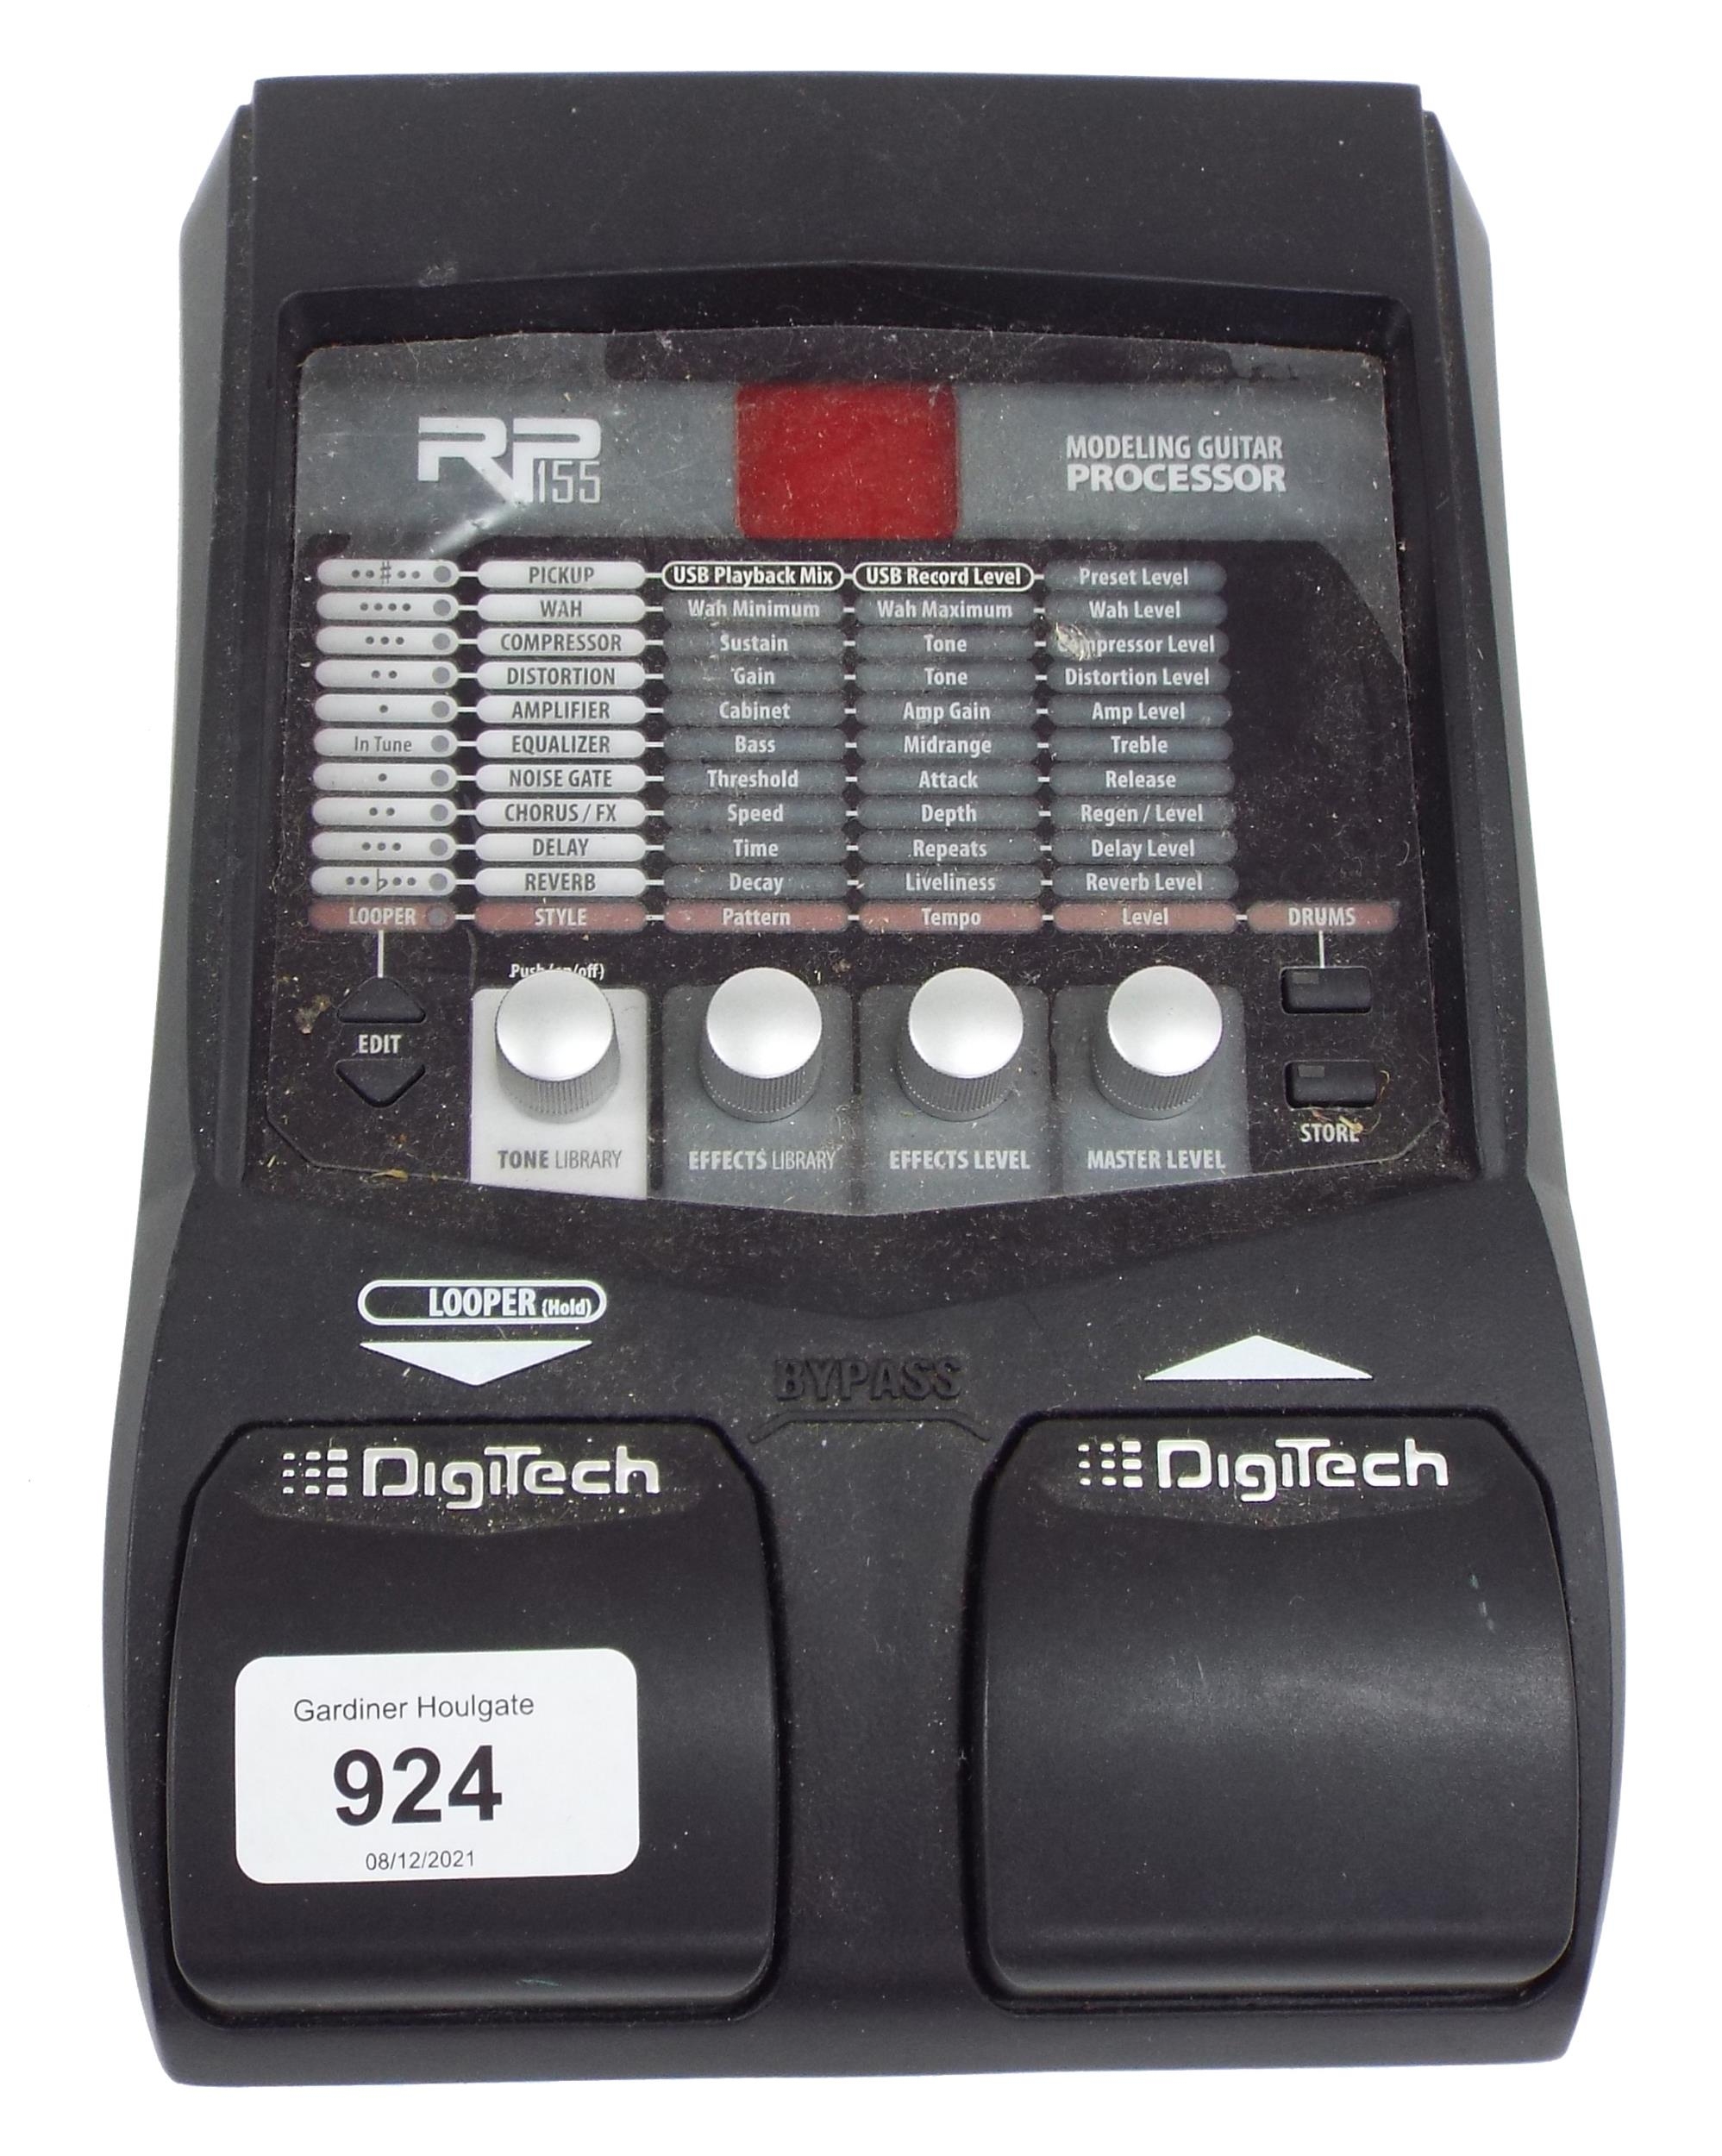 Digitech RP155 modelling guitar processor pedal